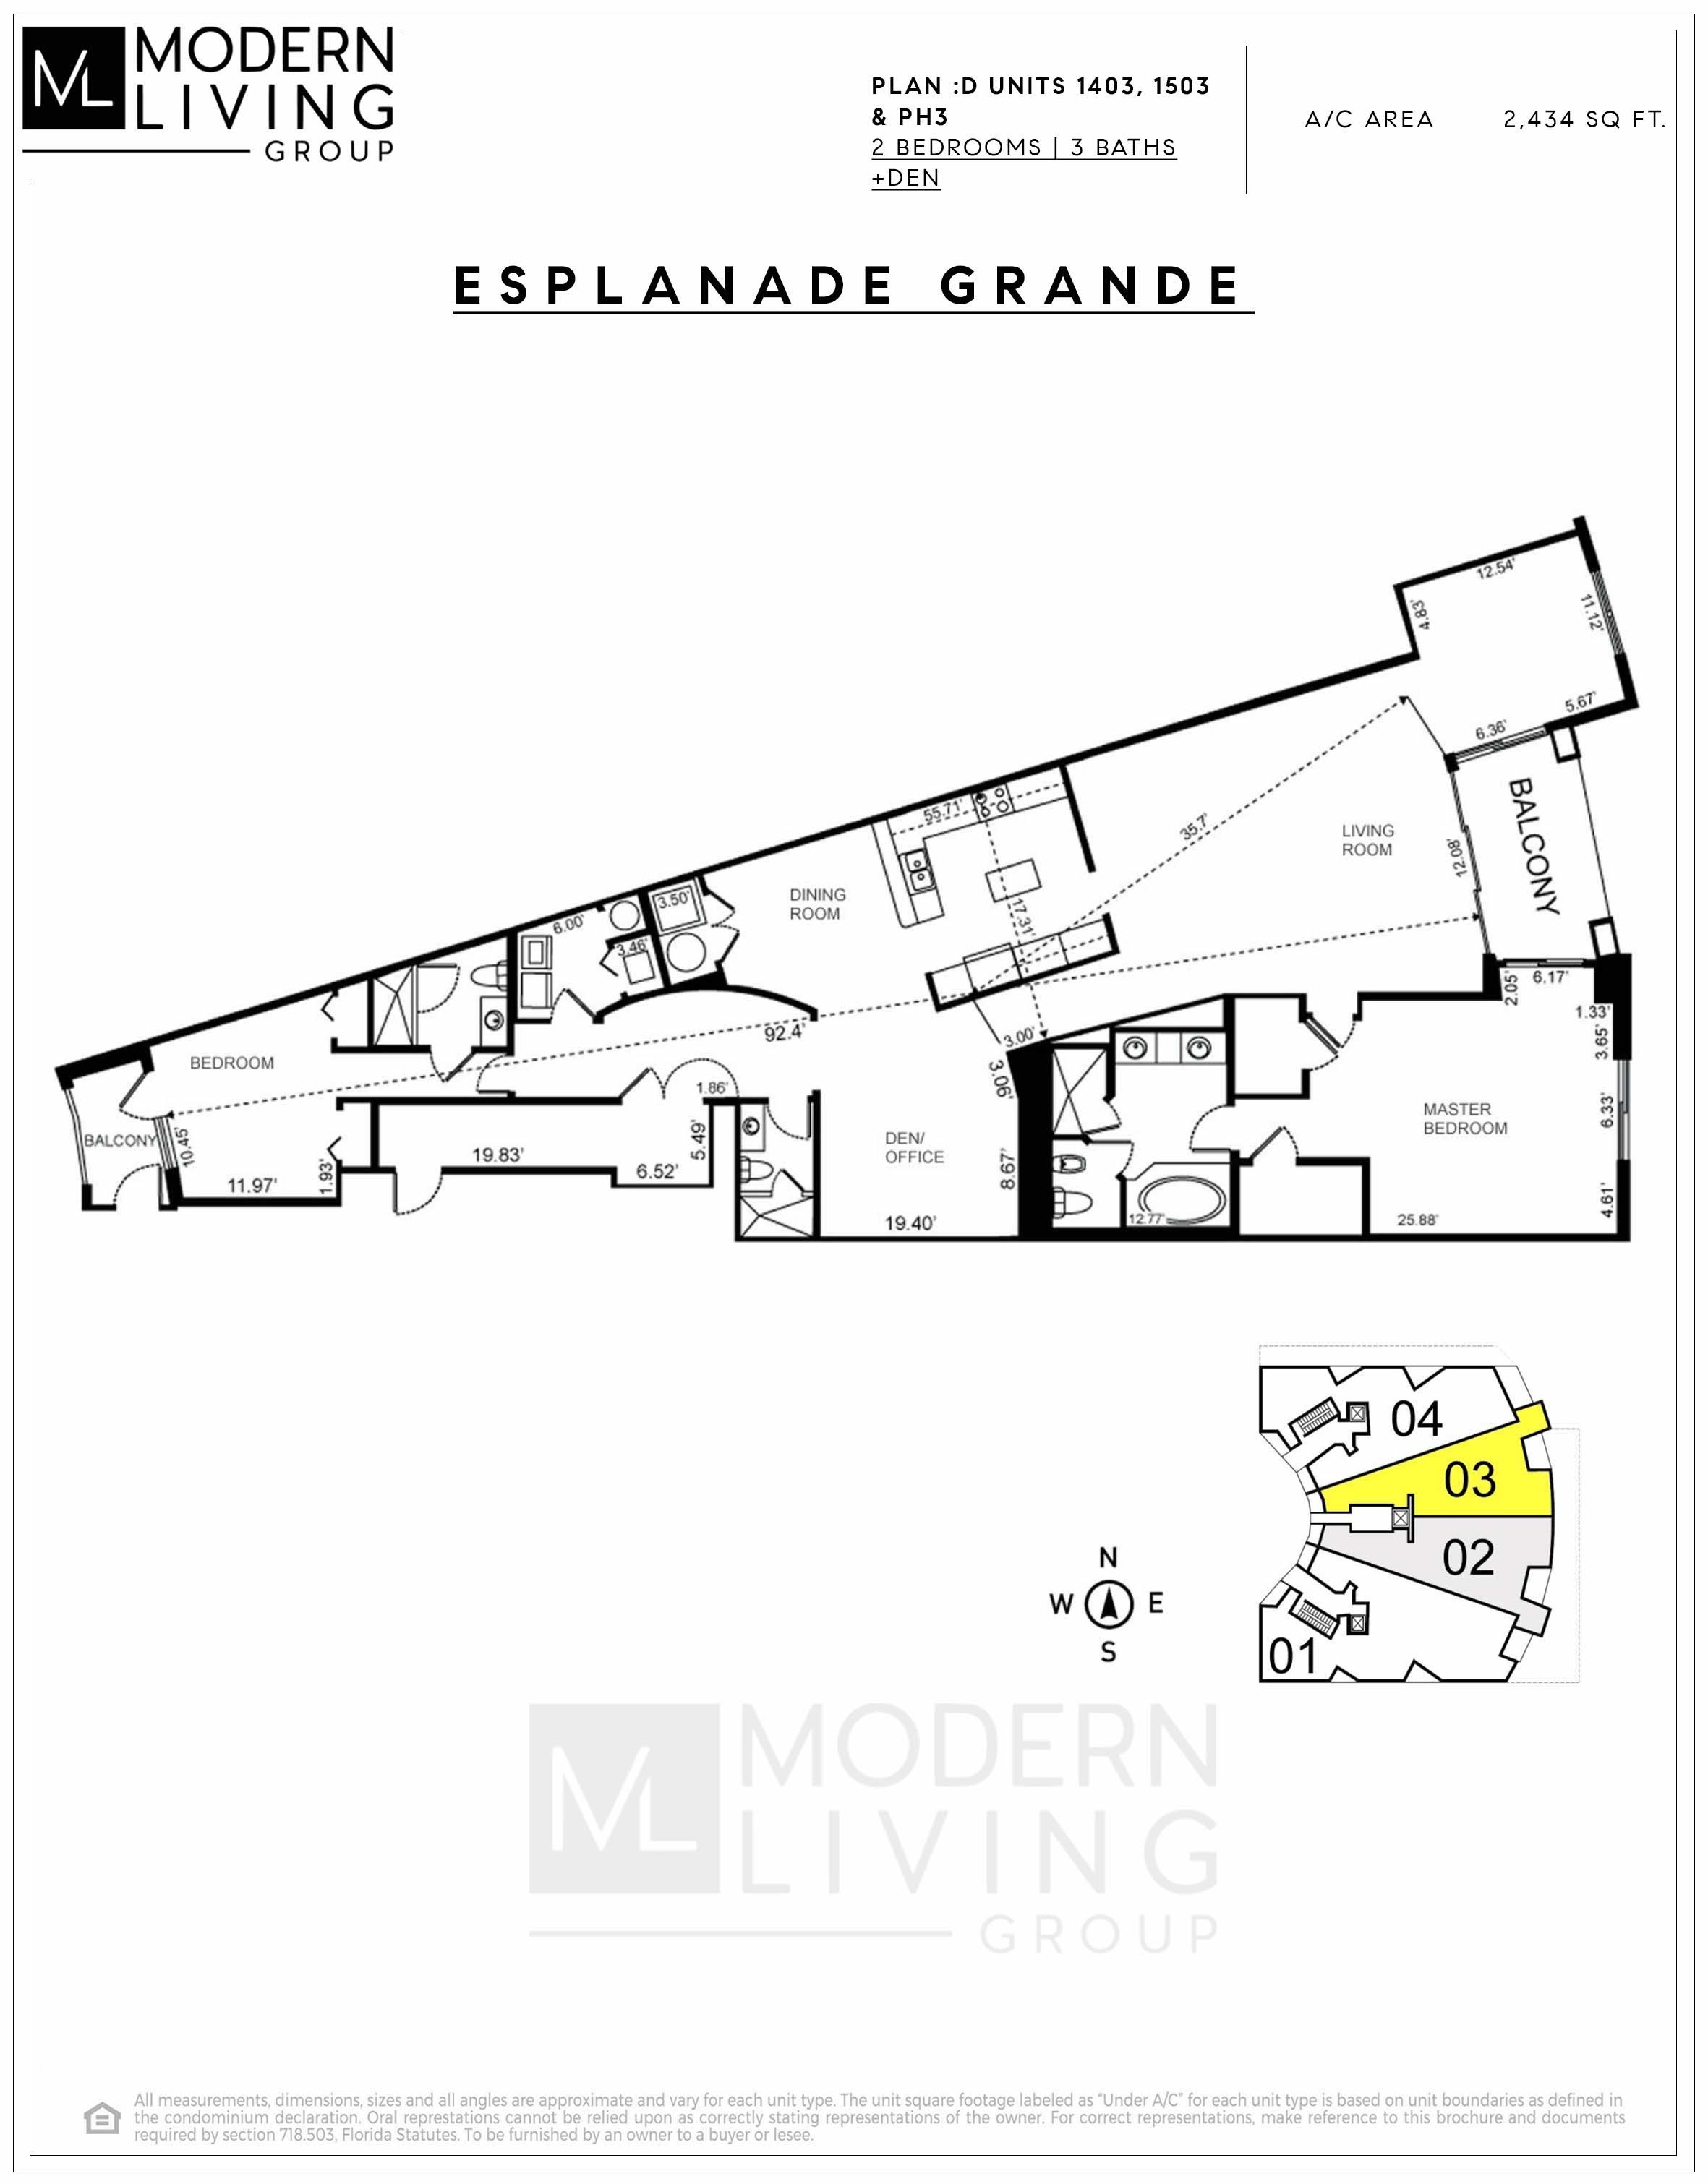 Floor Plan for Esplanade Grande Floorplans, Type D Units 1403, 1503 & PH3